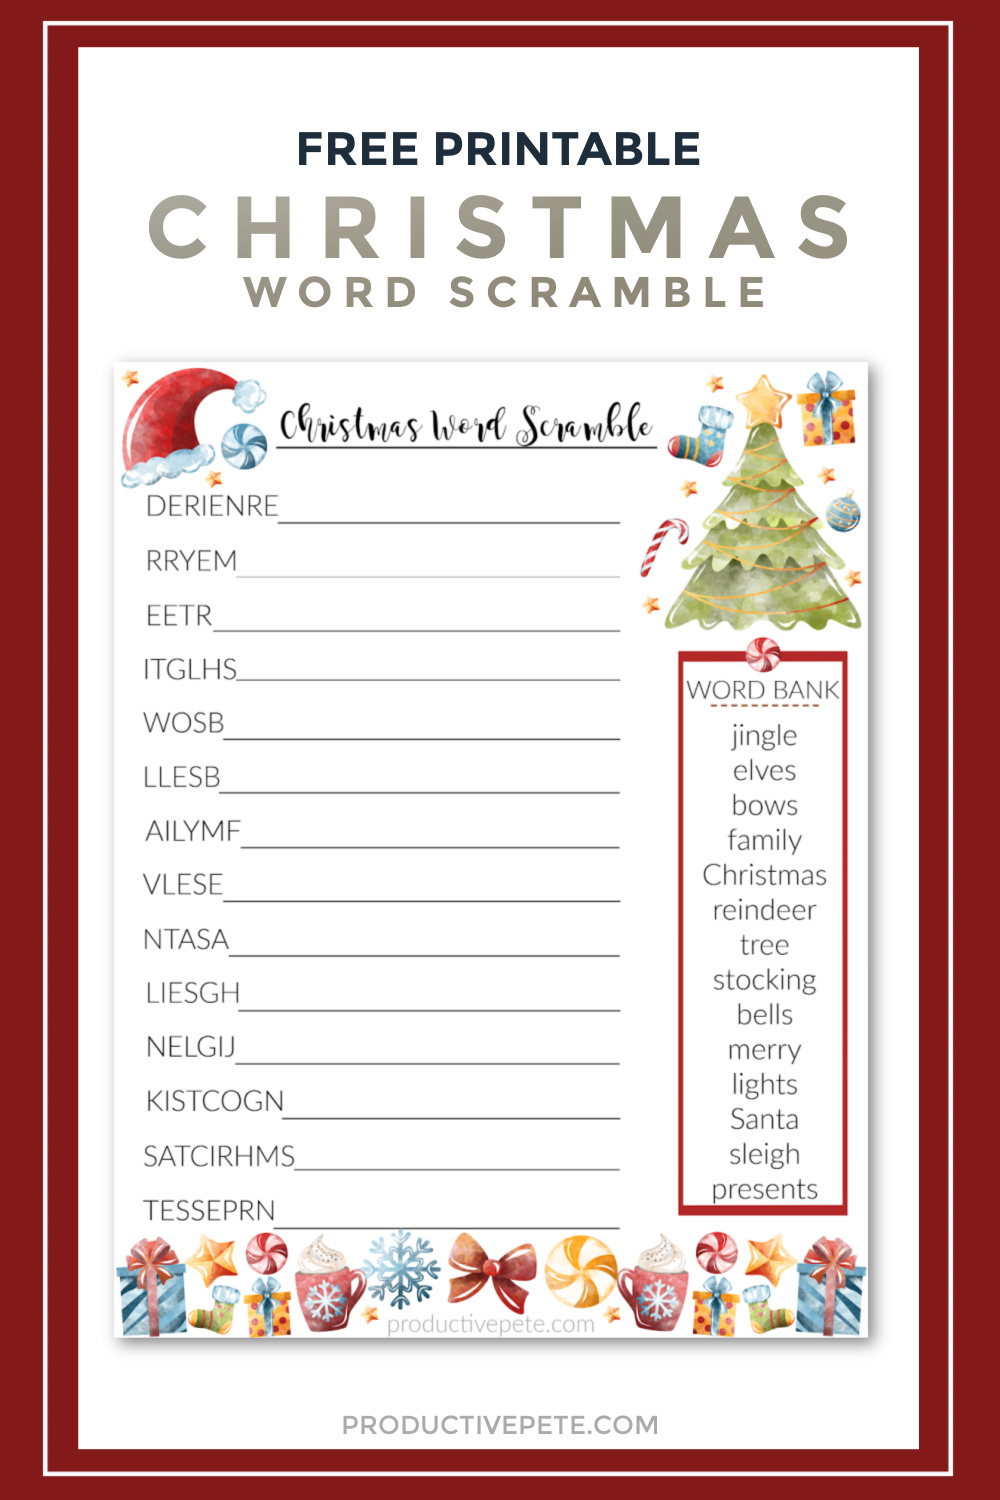 Free Printable Christmas Word Scramble PDF for Kids - Productive Pete